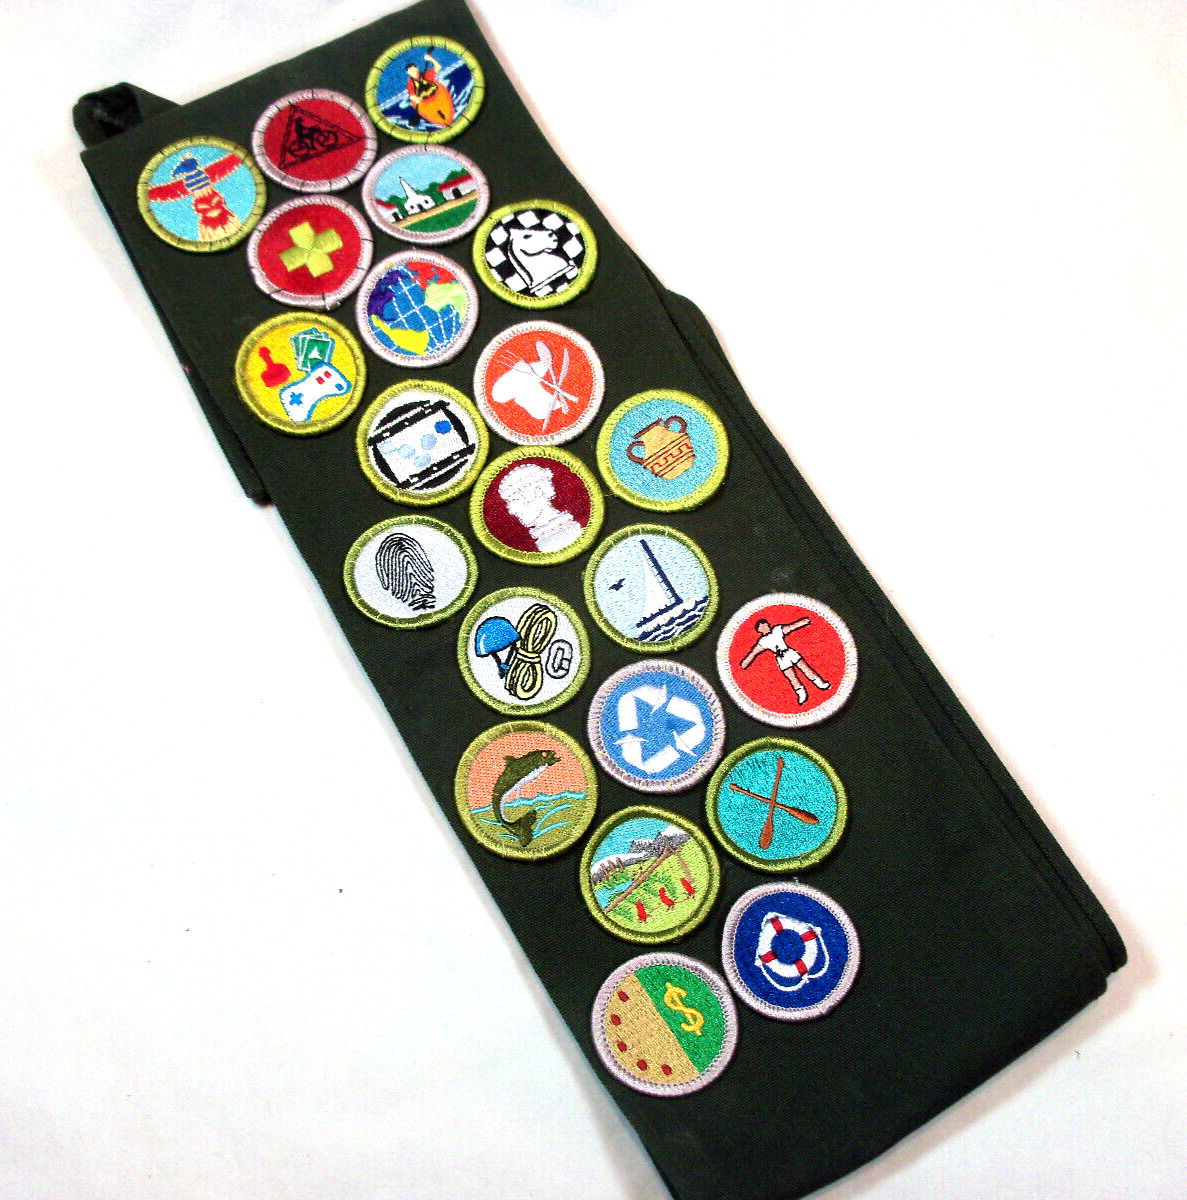 Vintage Original BSA Boy Scout Green Sash with 22 Merit Badges Patches